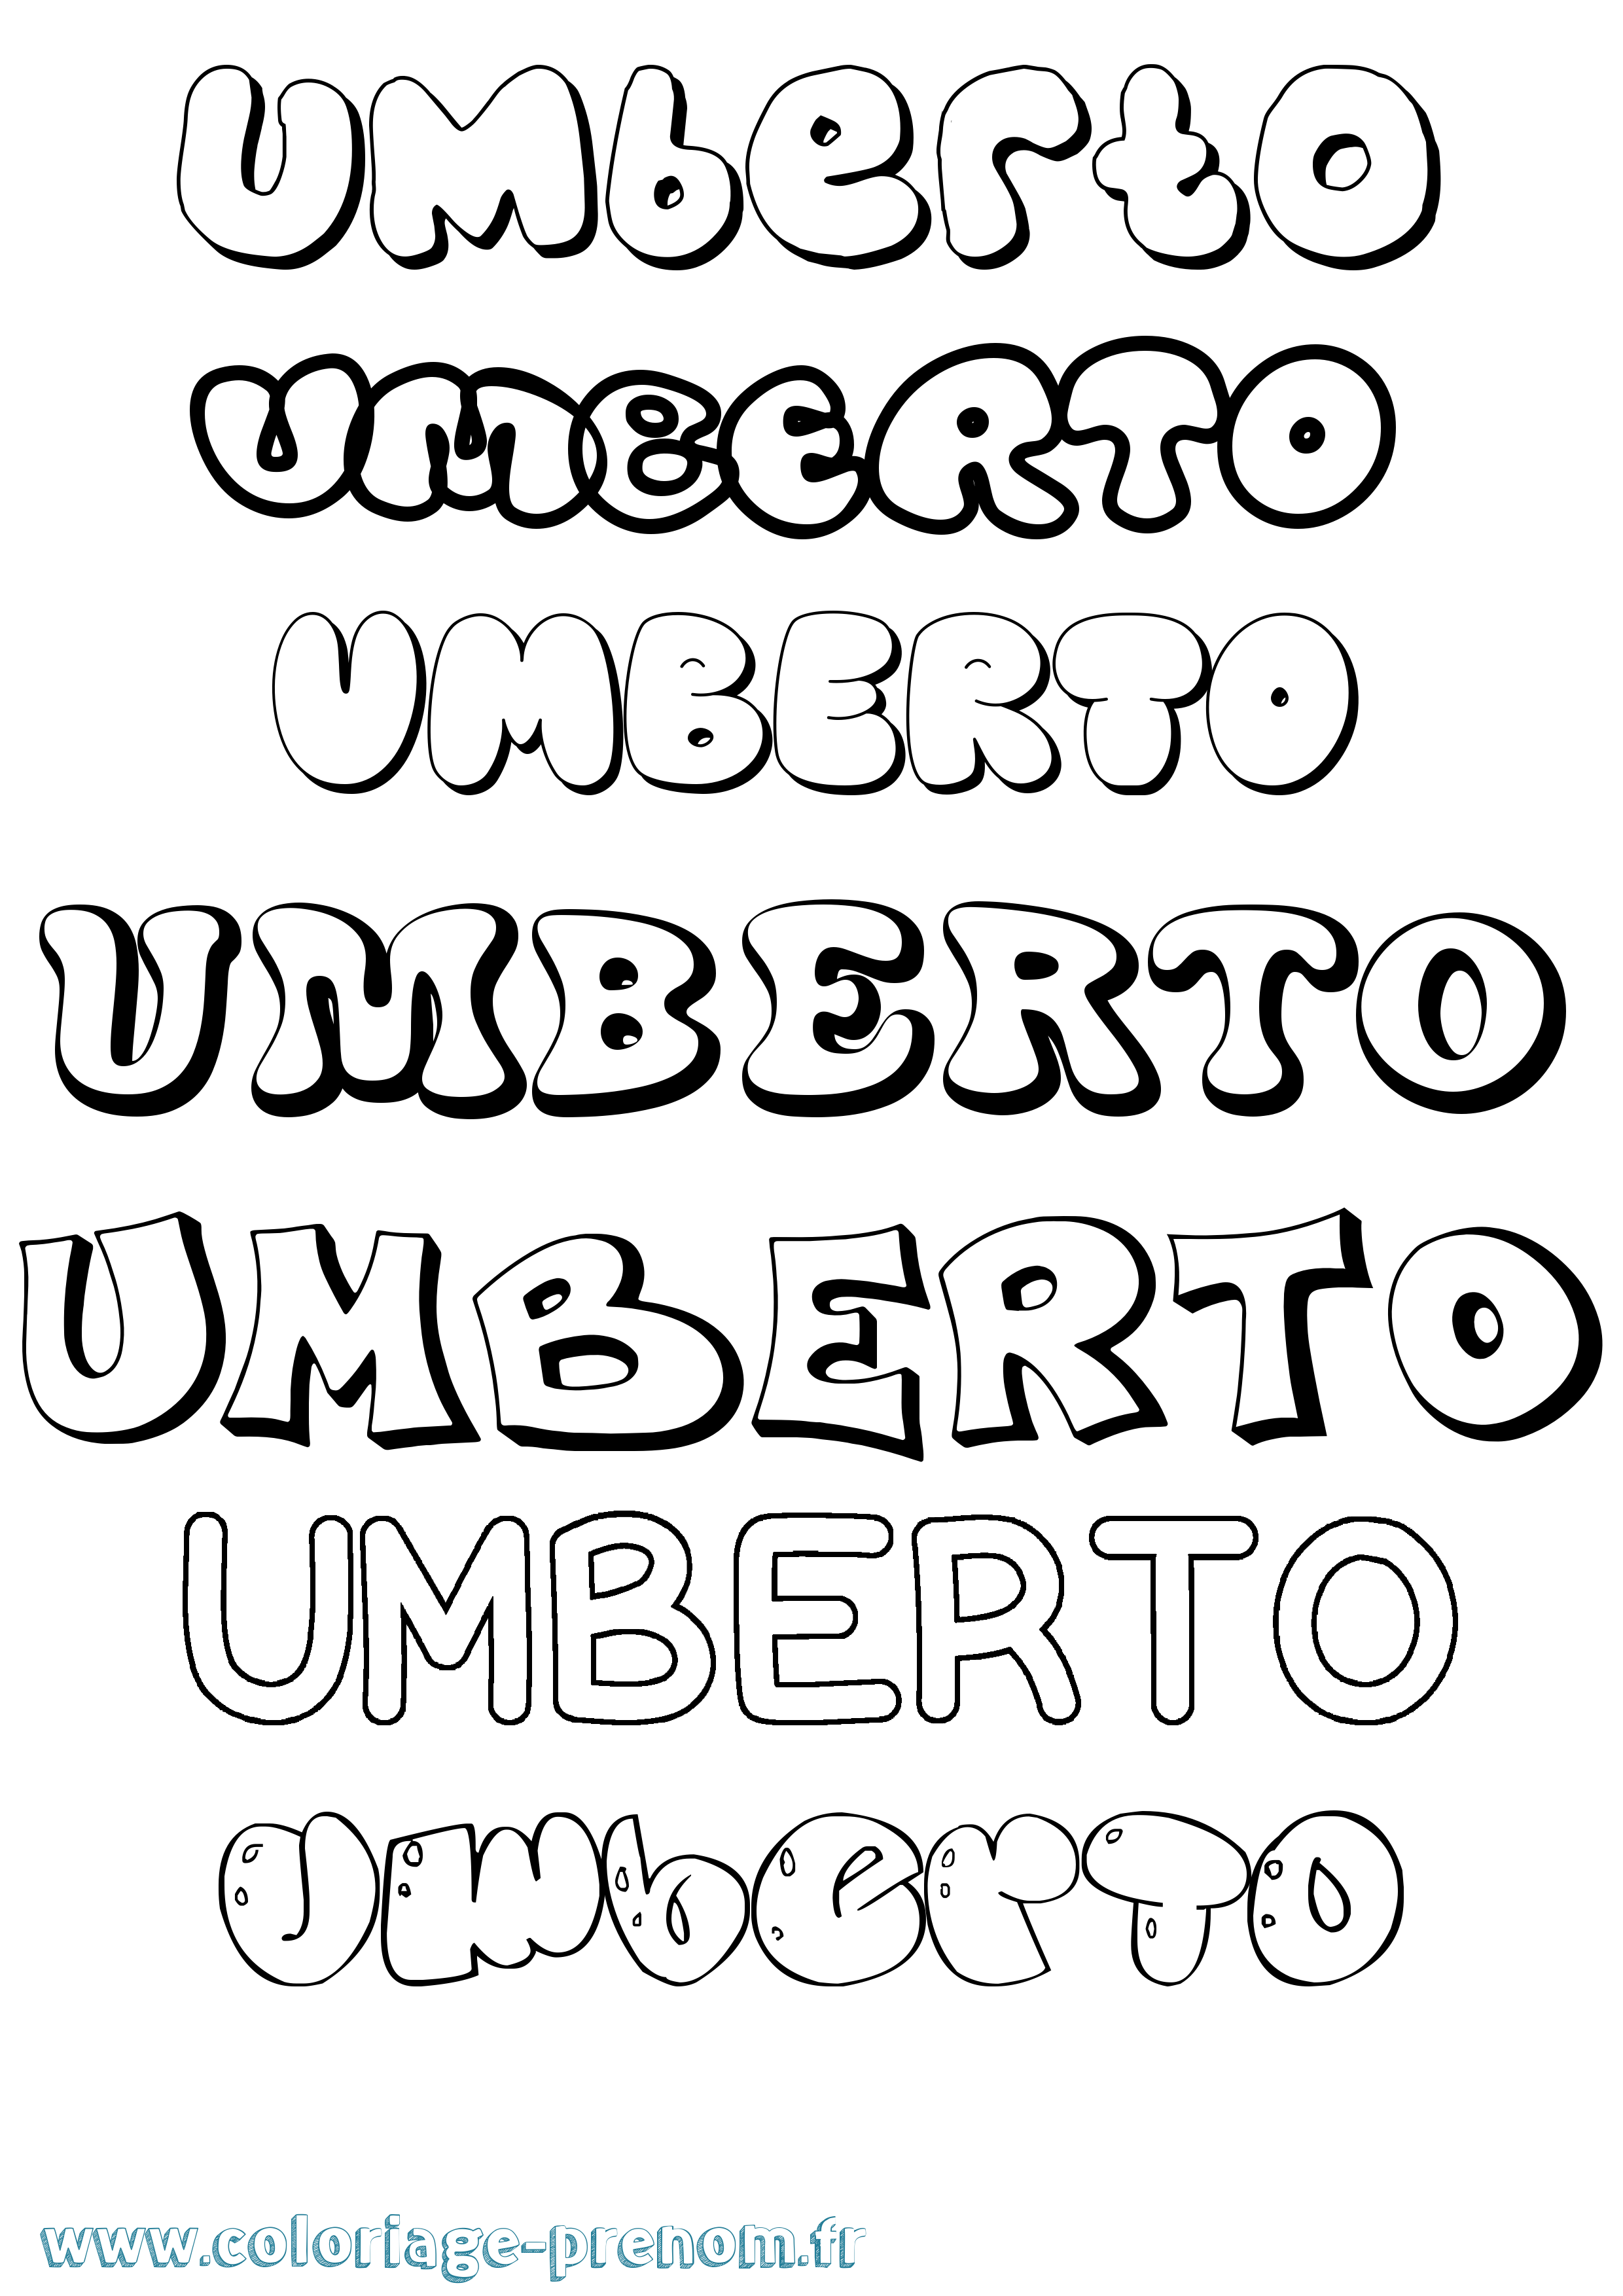 Coloriage prénom Umberto Bubble